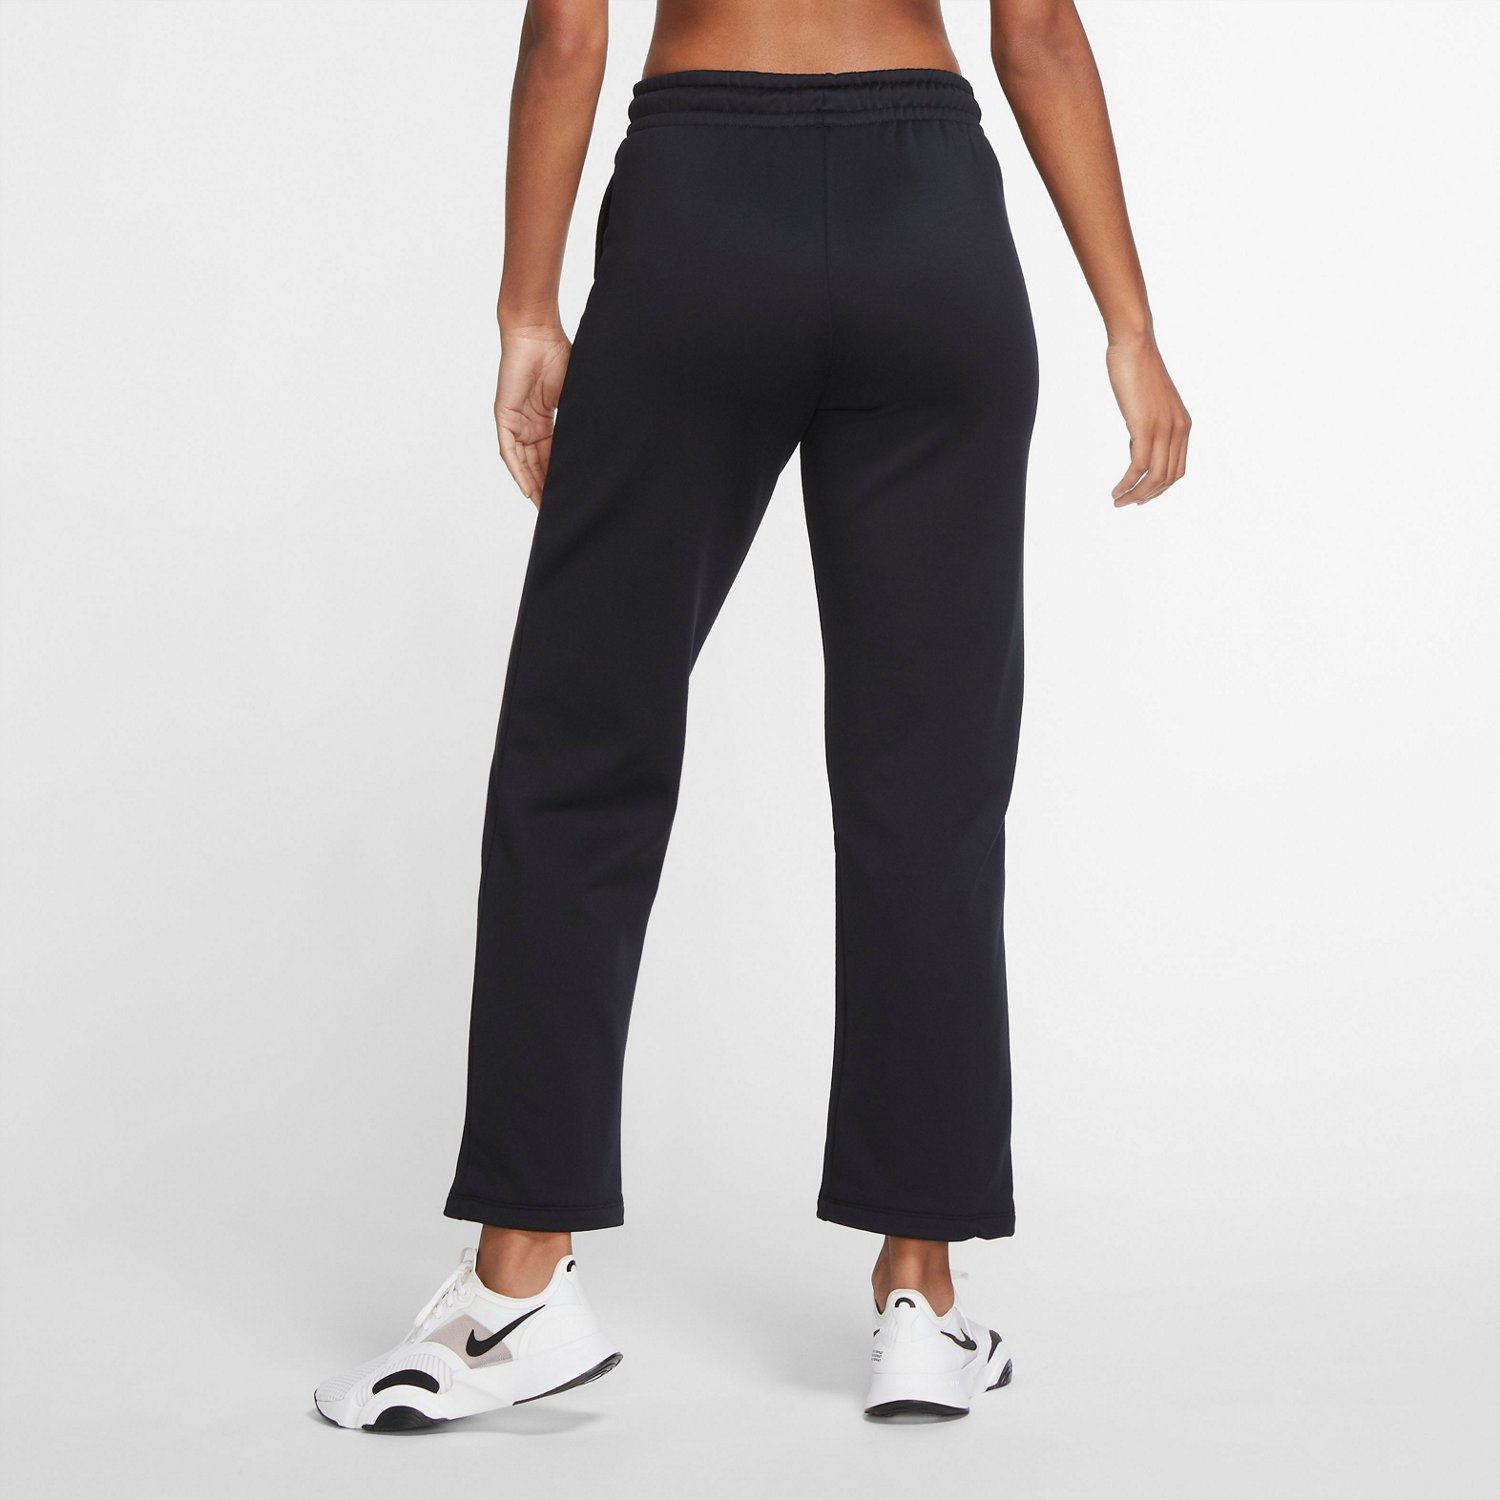 Nike Dri Fit All Time Tech Pants Black Pockets 747973-012 Womens Size Medium